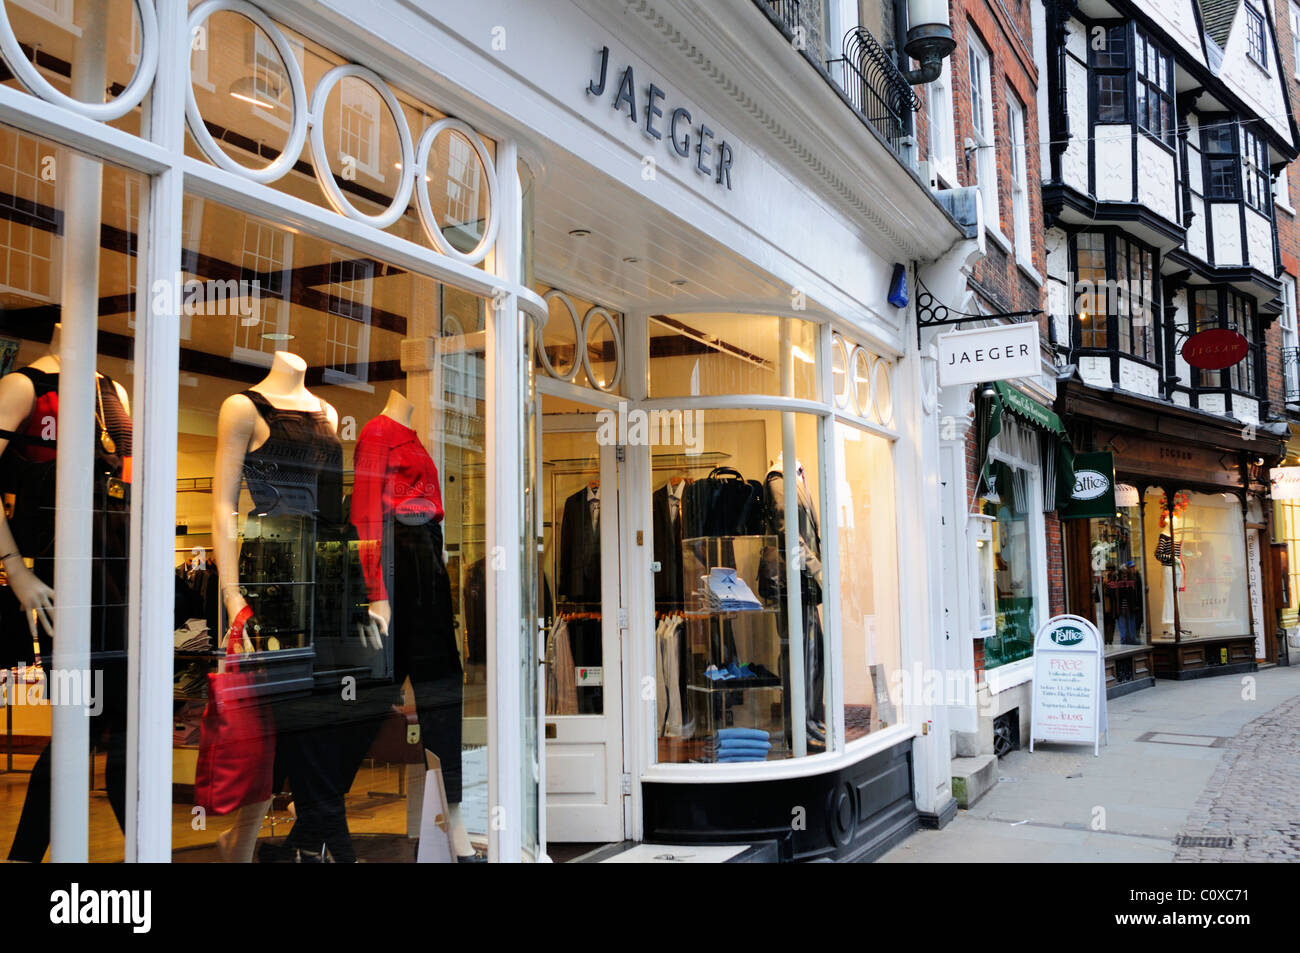 Magasin de vêtements Jaeger, Trinity Street, Cambridge, England, UK Banque D'Images